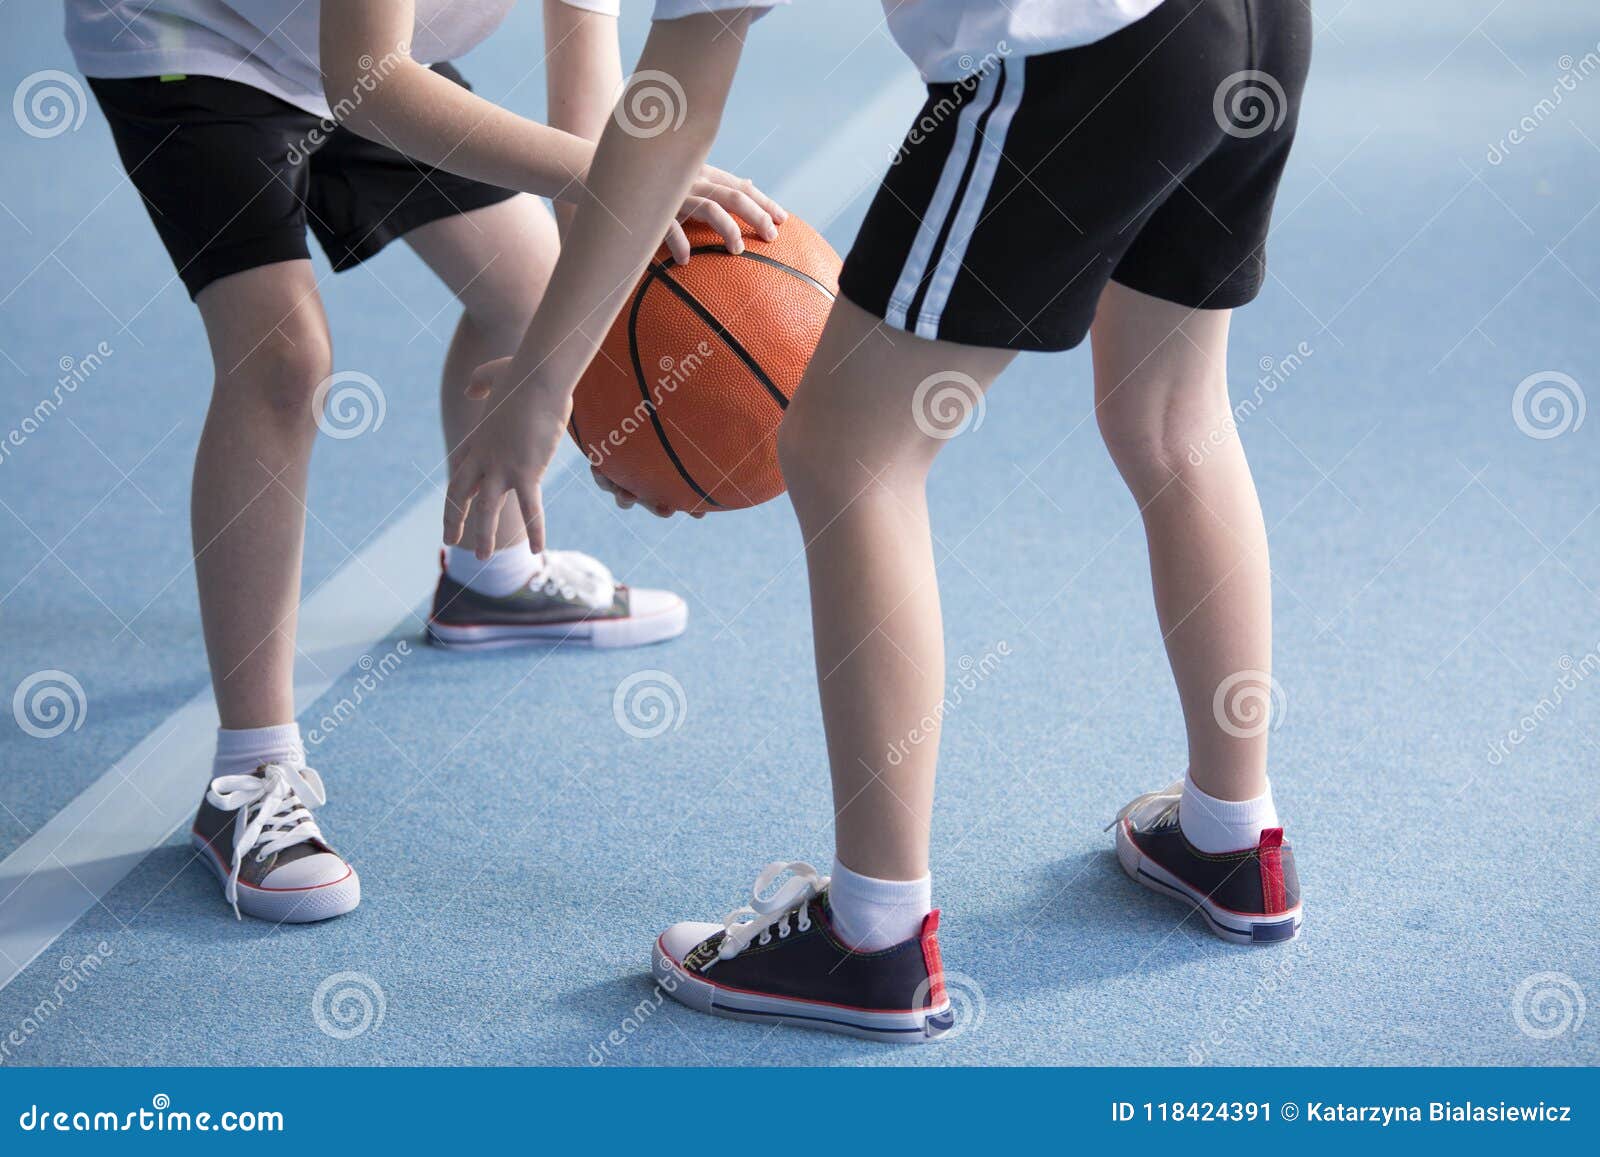 Children Learning To Dribble Basketball Stock Image